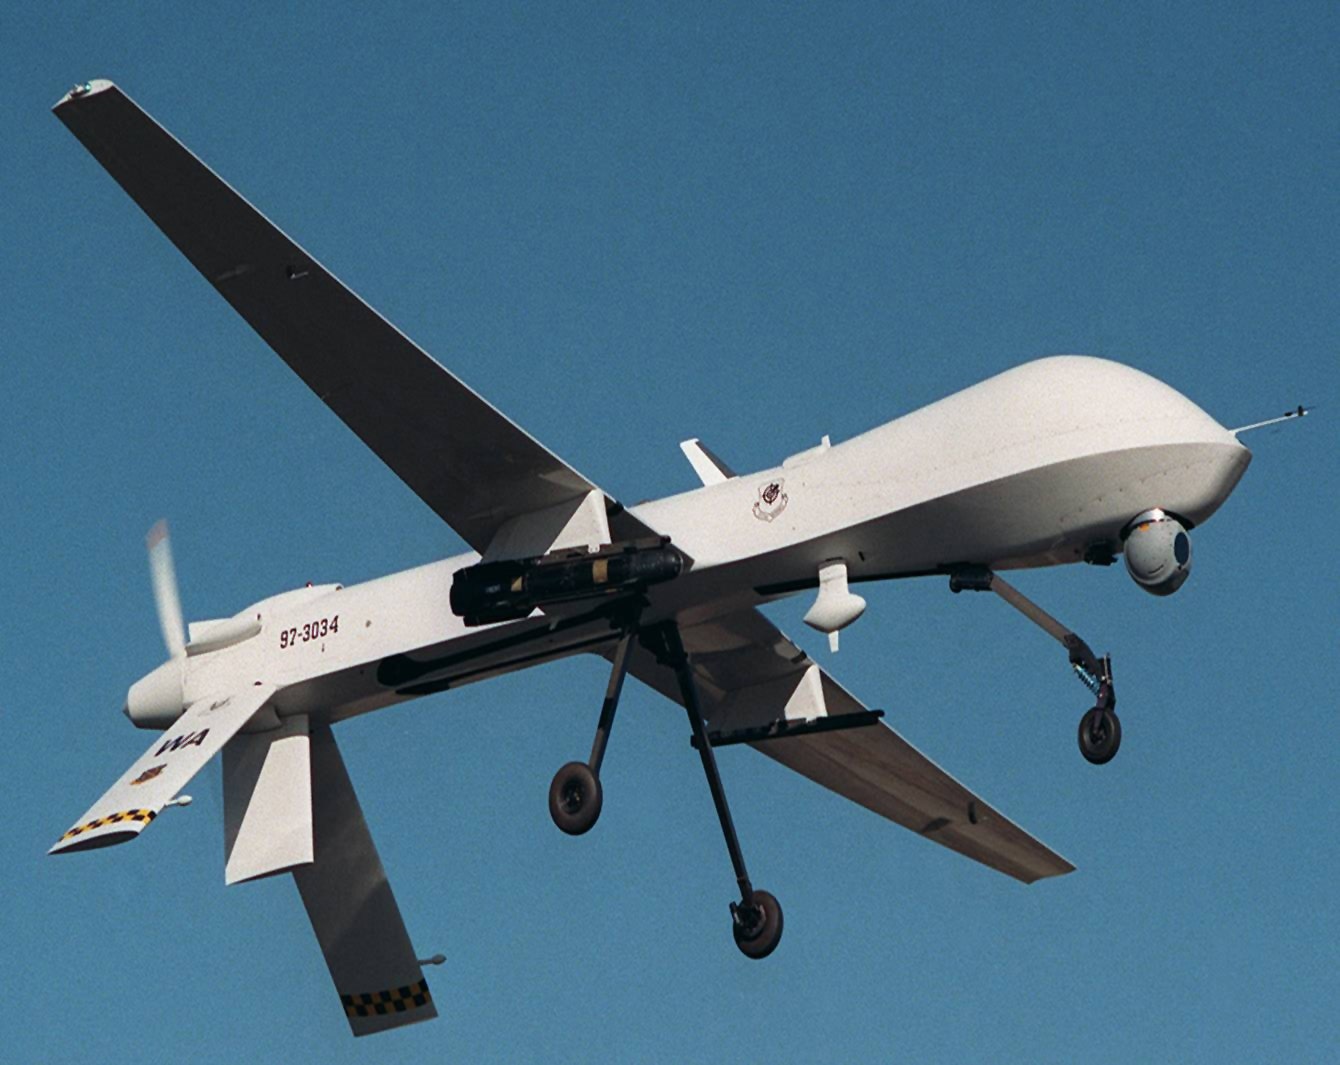 Predators, Raptors and More: The Wide World of Drones